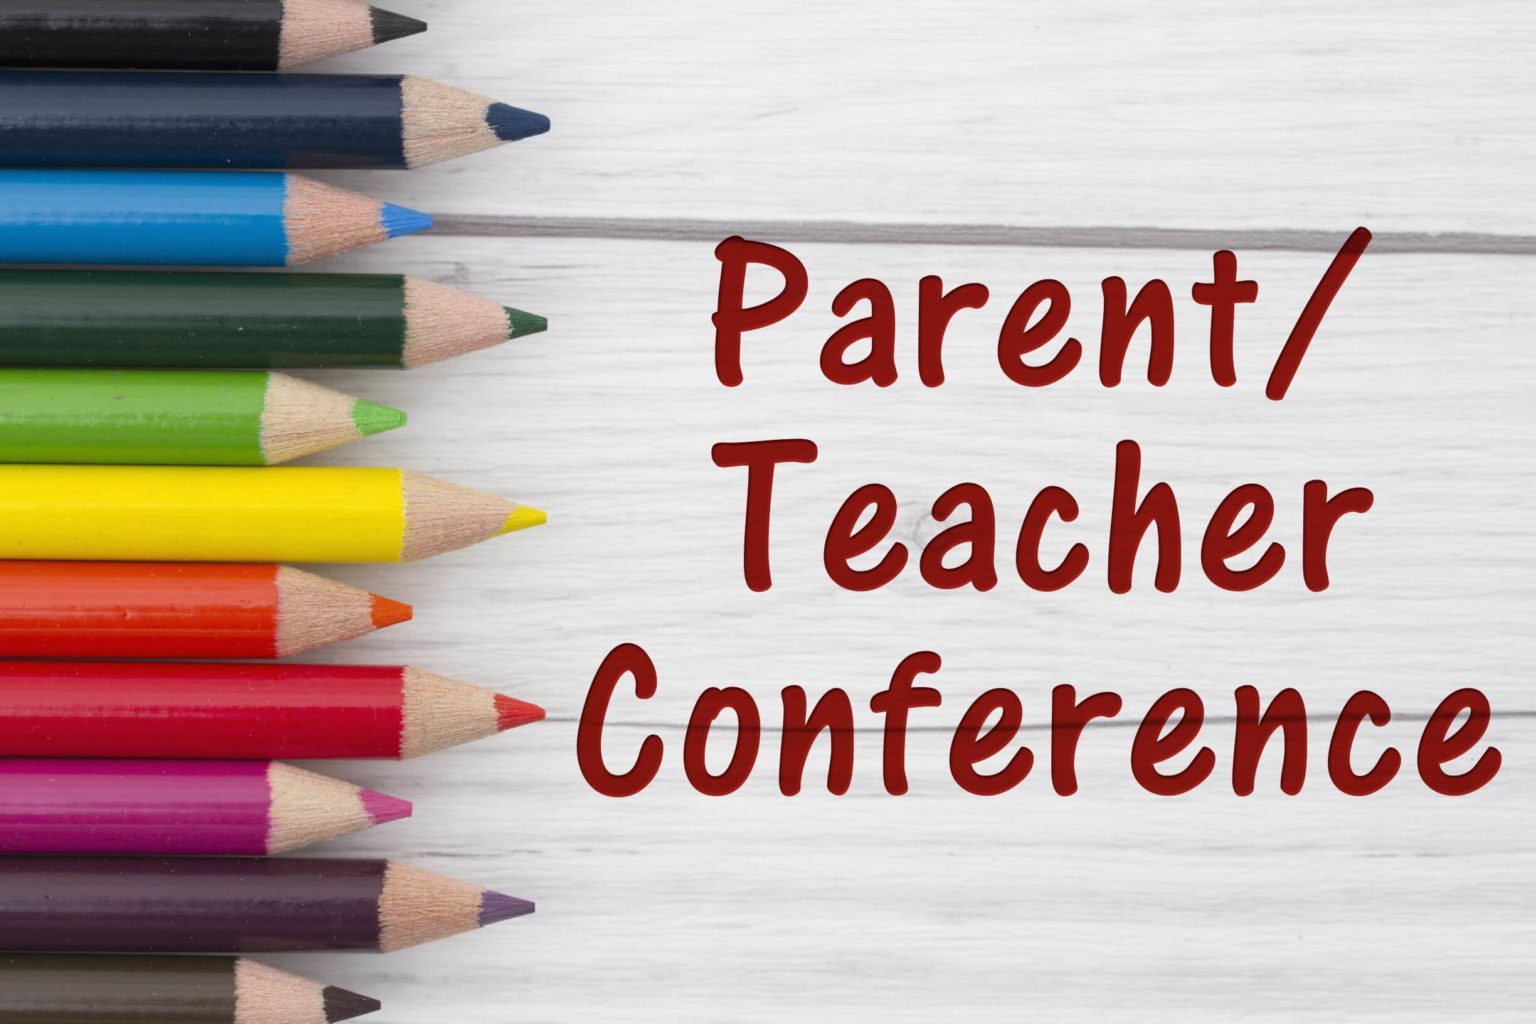 Parent-Teacher Conferences February 2 and 3, 2022